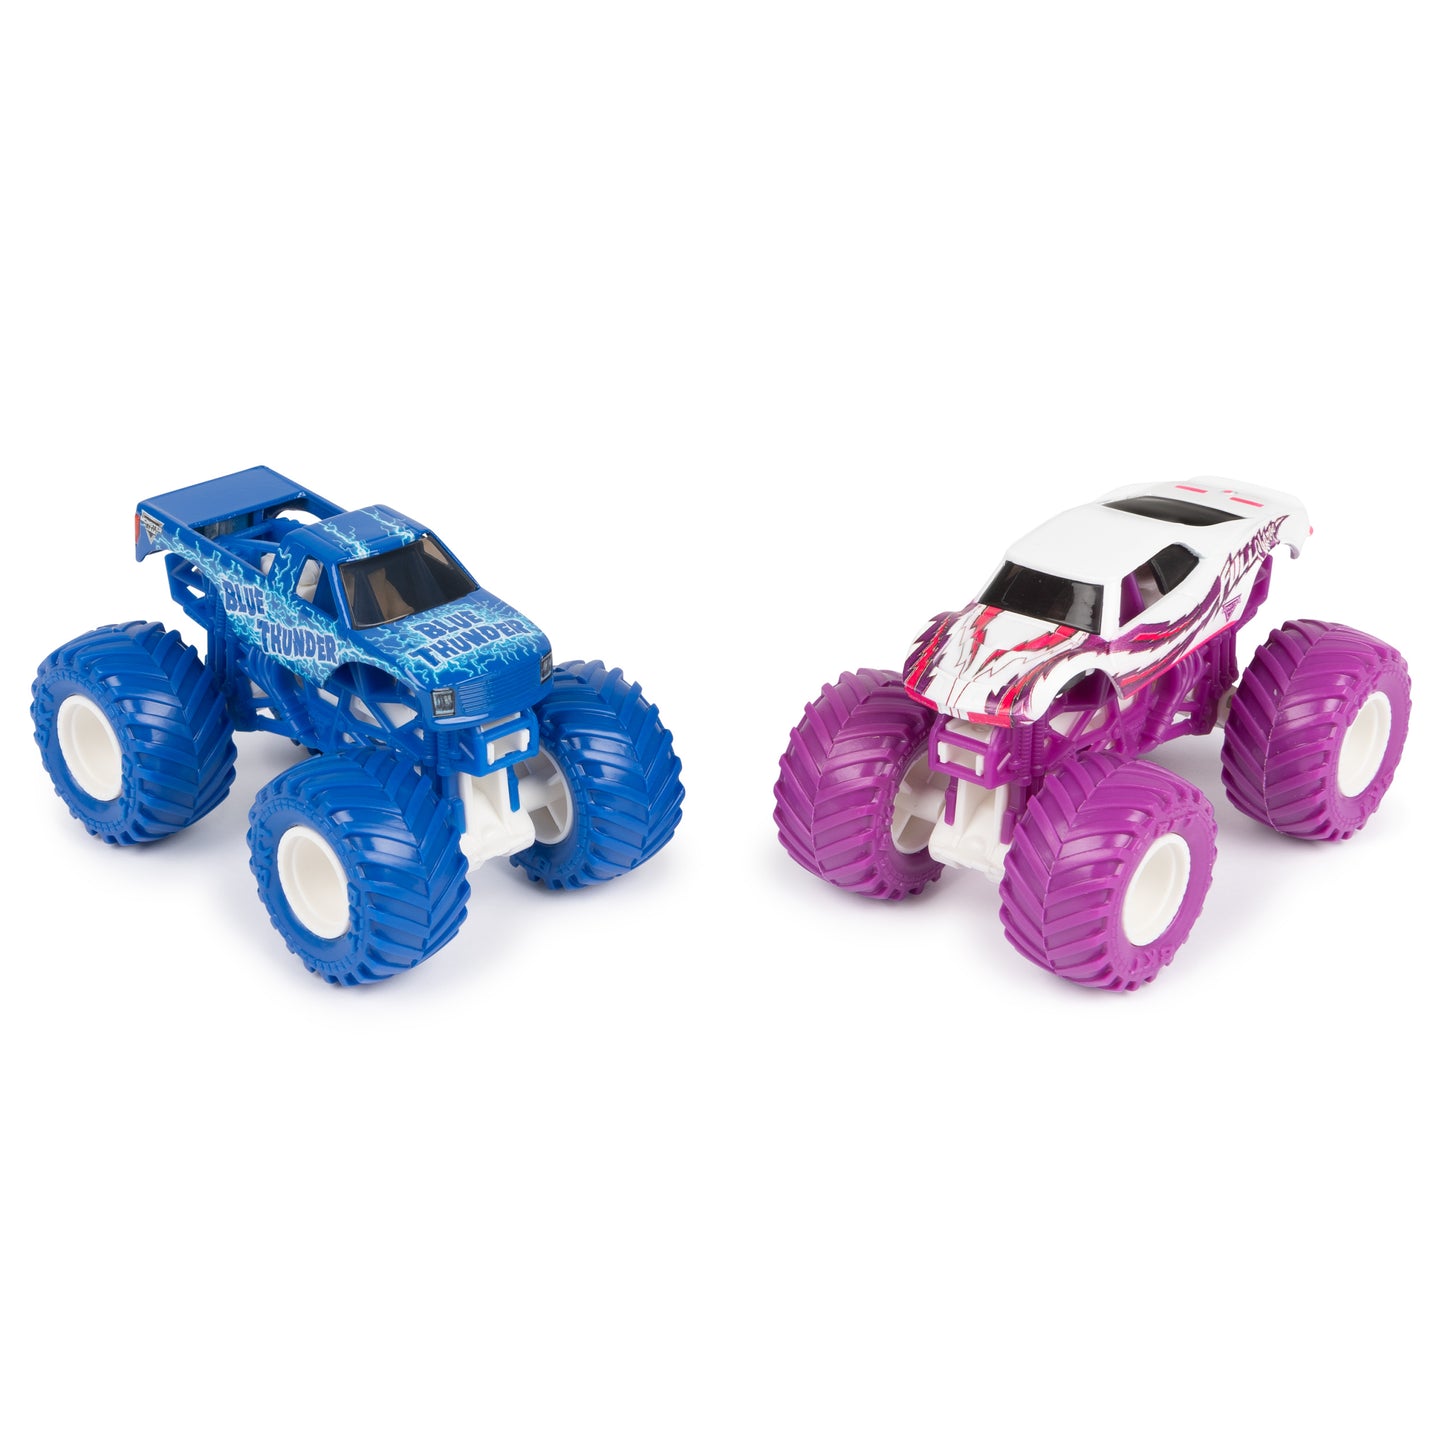 Monster Jam, Official Blue Thunder Vs. Full Charge Die-Cast Monster Trucks, 1:64 Scale, Kids Toys for Boys Ages 3 and up